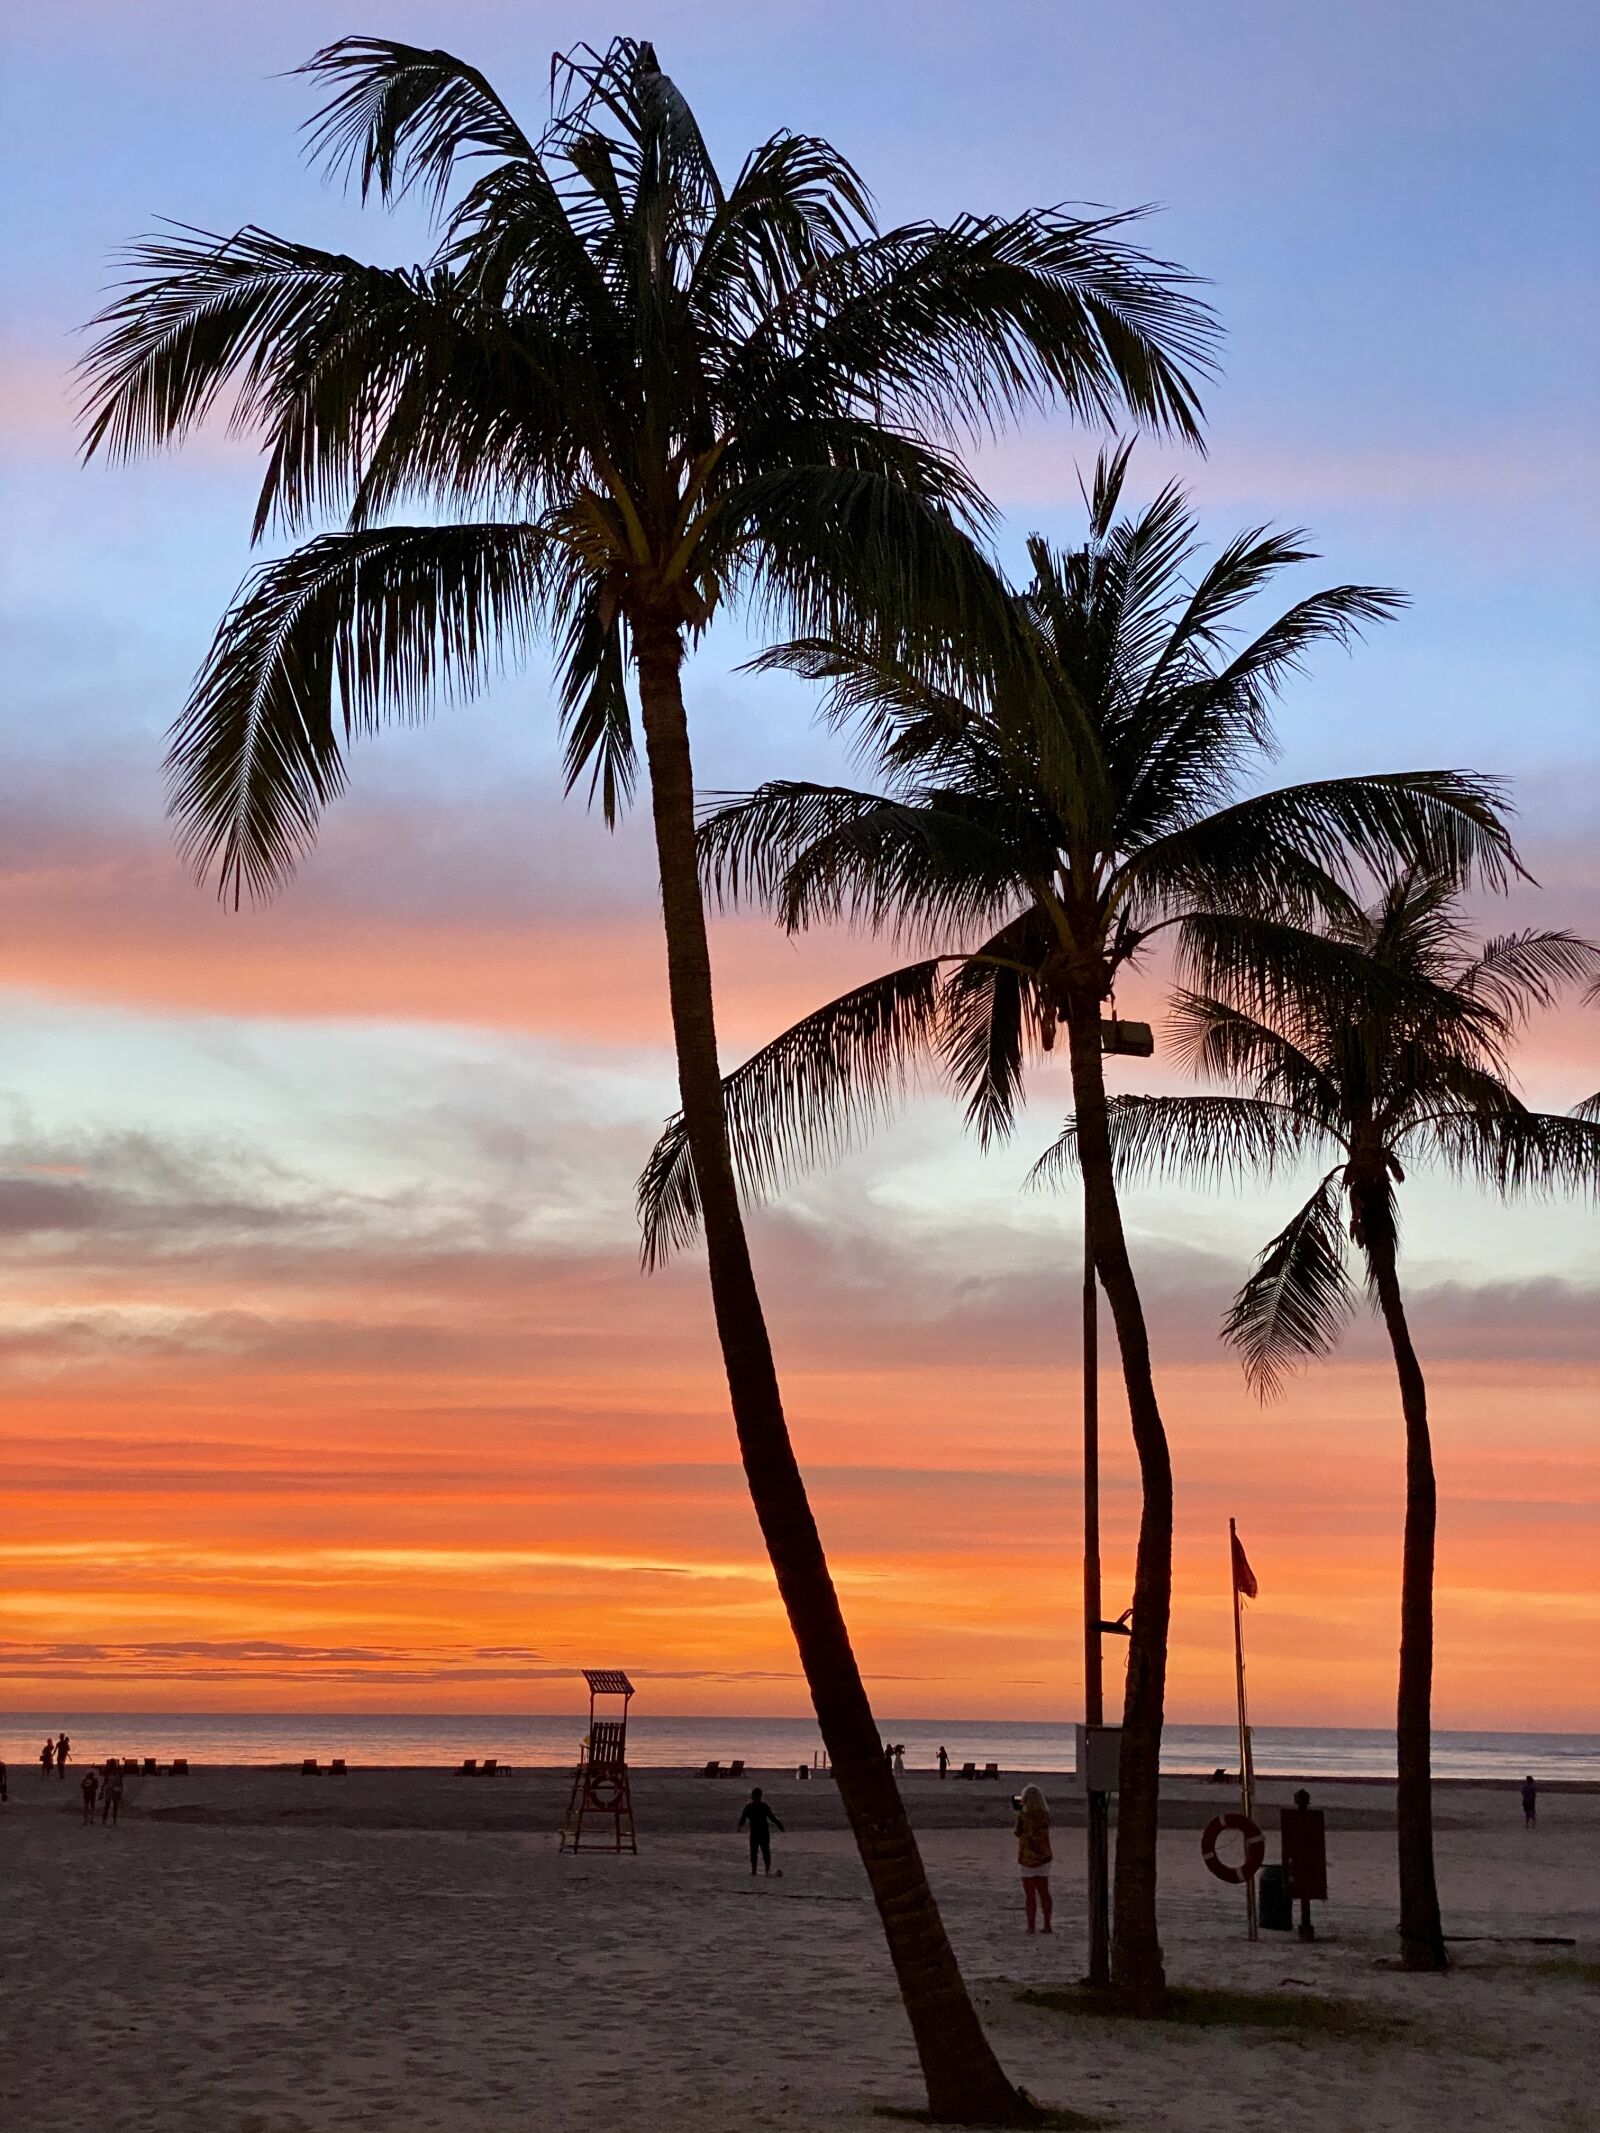 iPhone 11 Pro back triple camera 6mm f/2 sample photo. Sunset, palm trees, beach photography